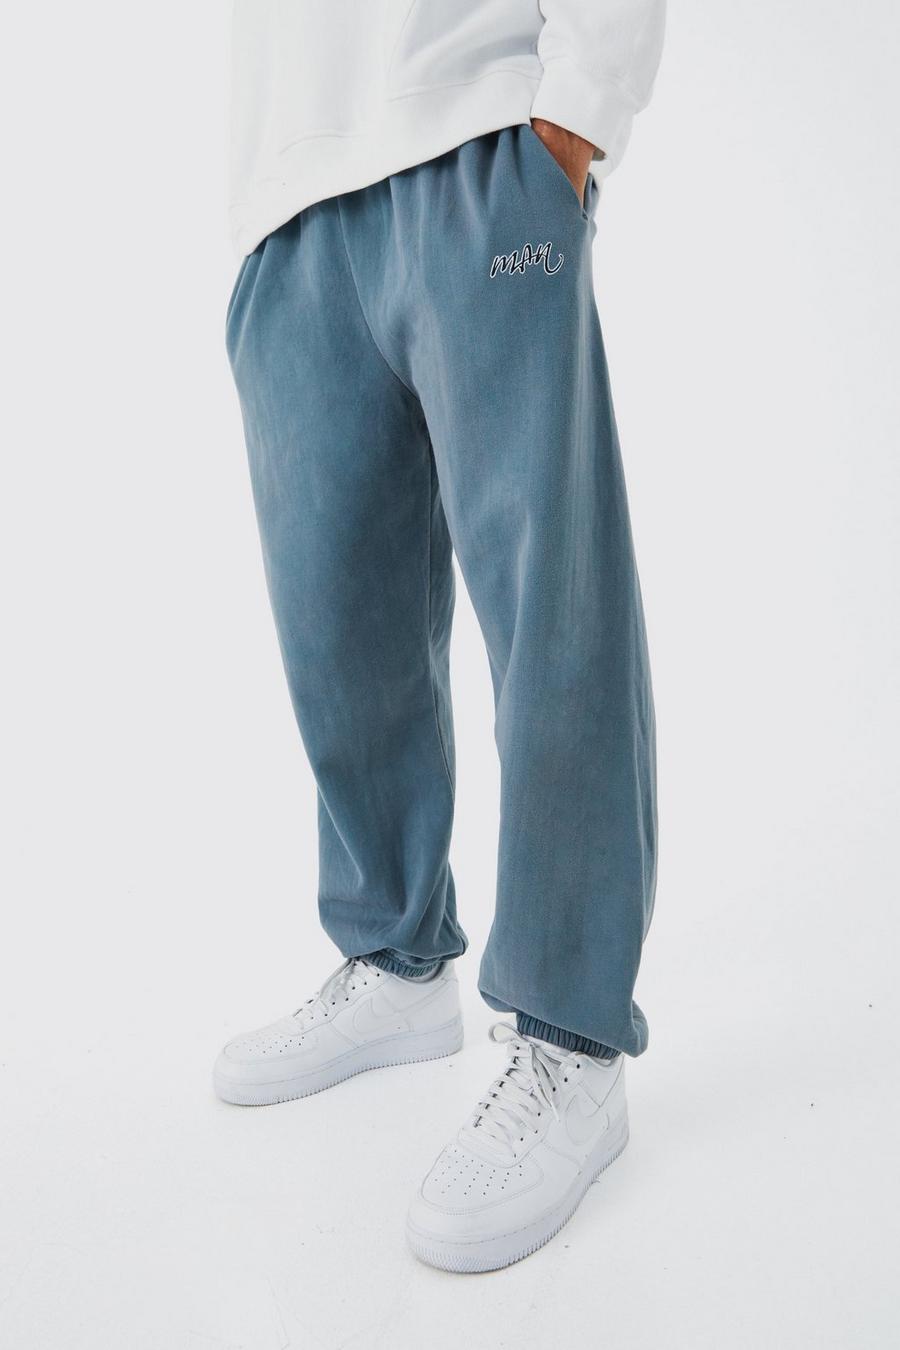 Pantaloni tuta oversize slavati con firma Man, Charcoal